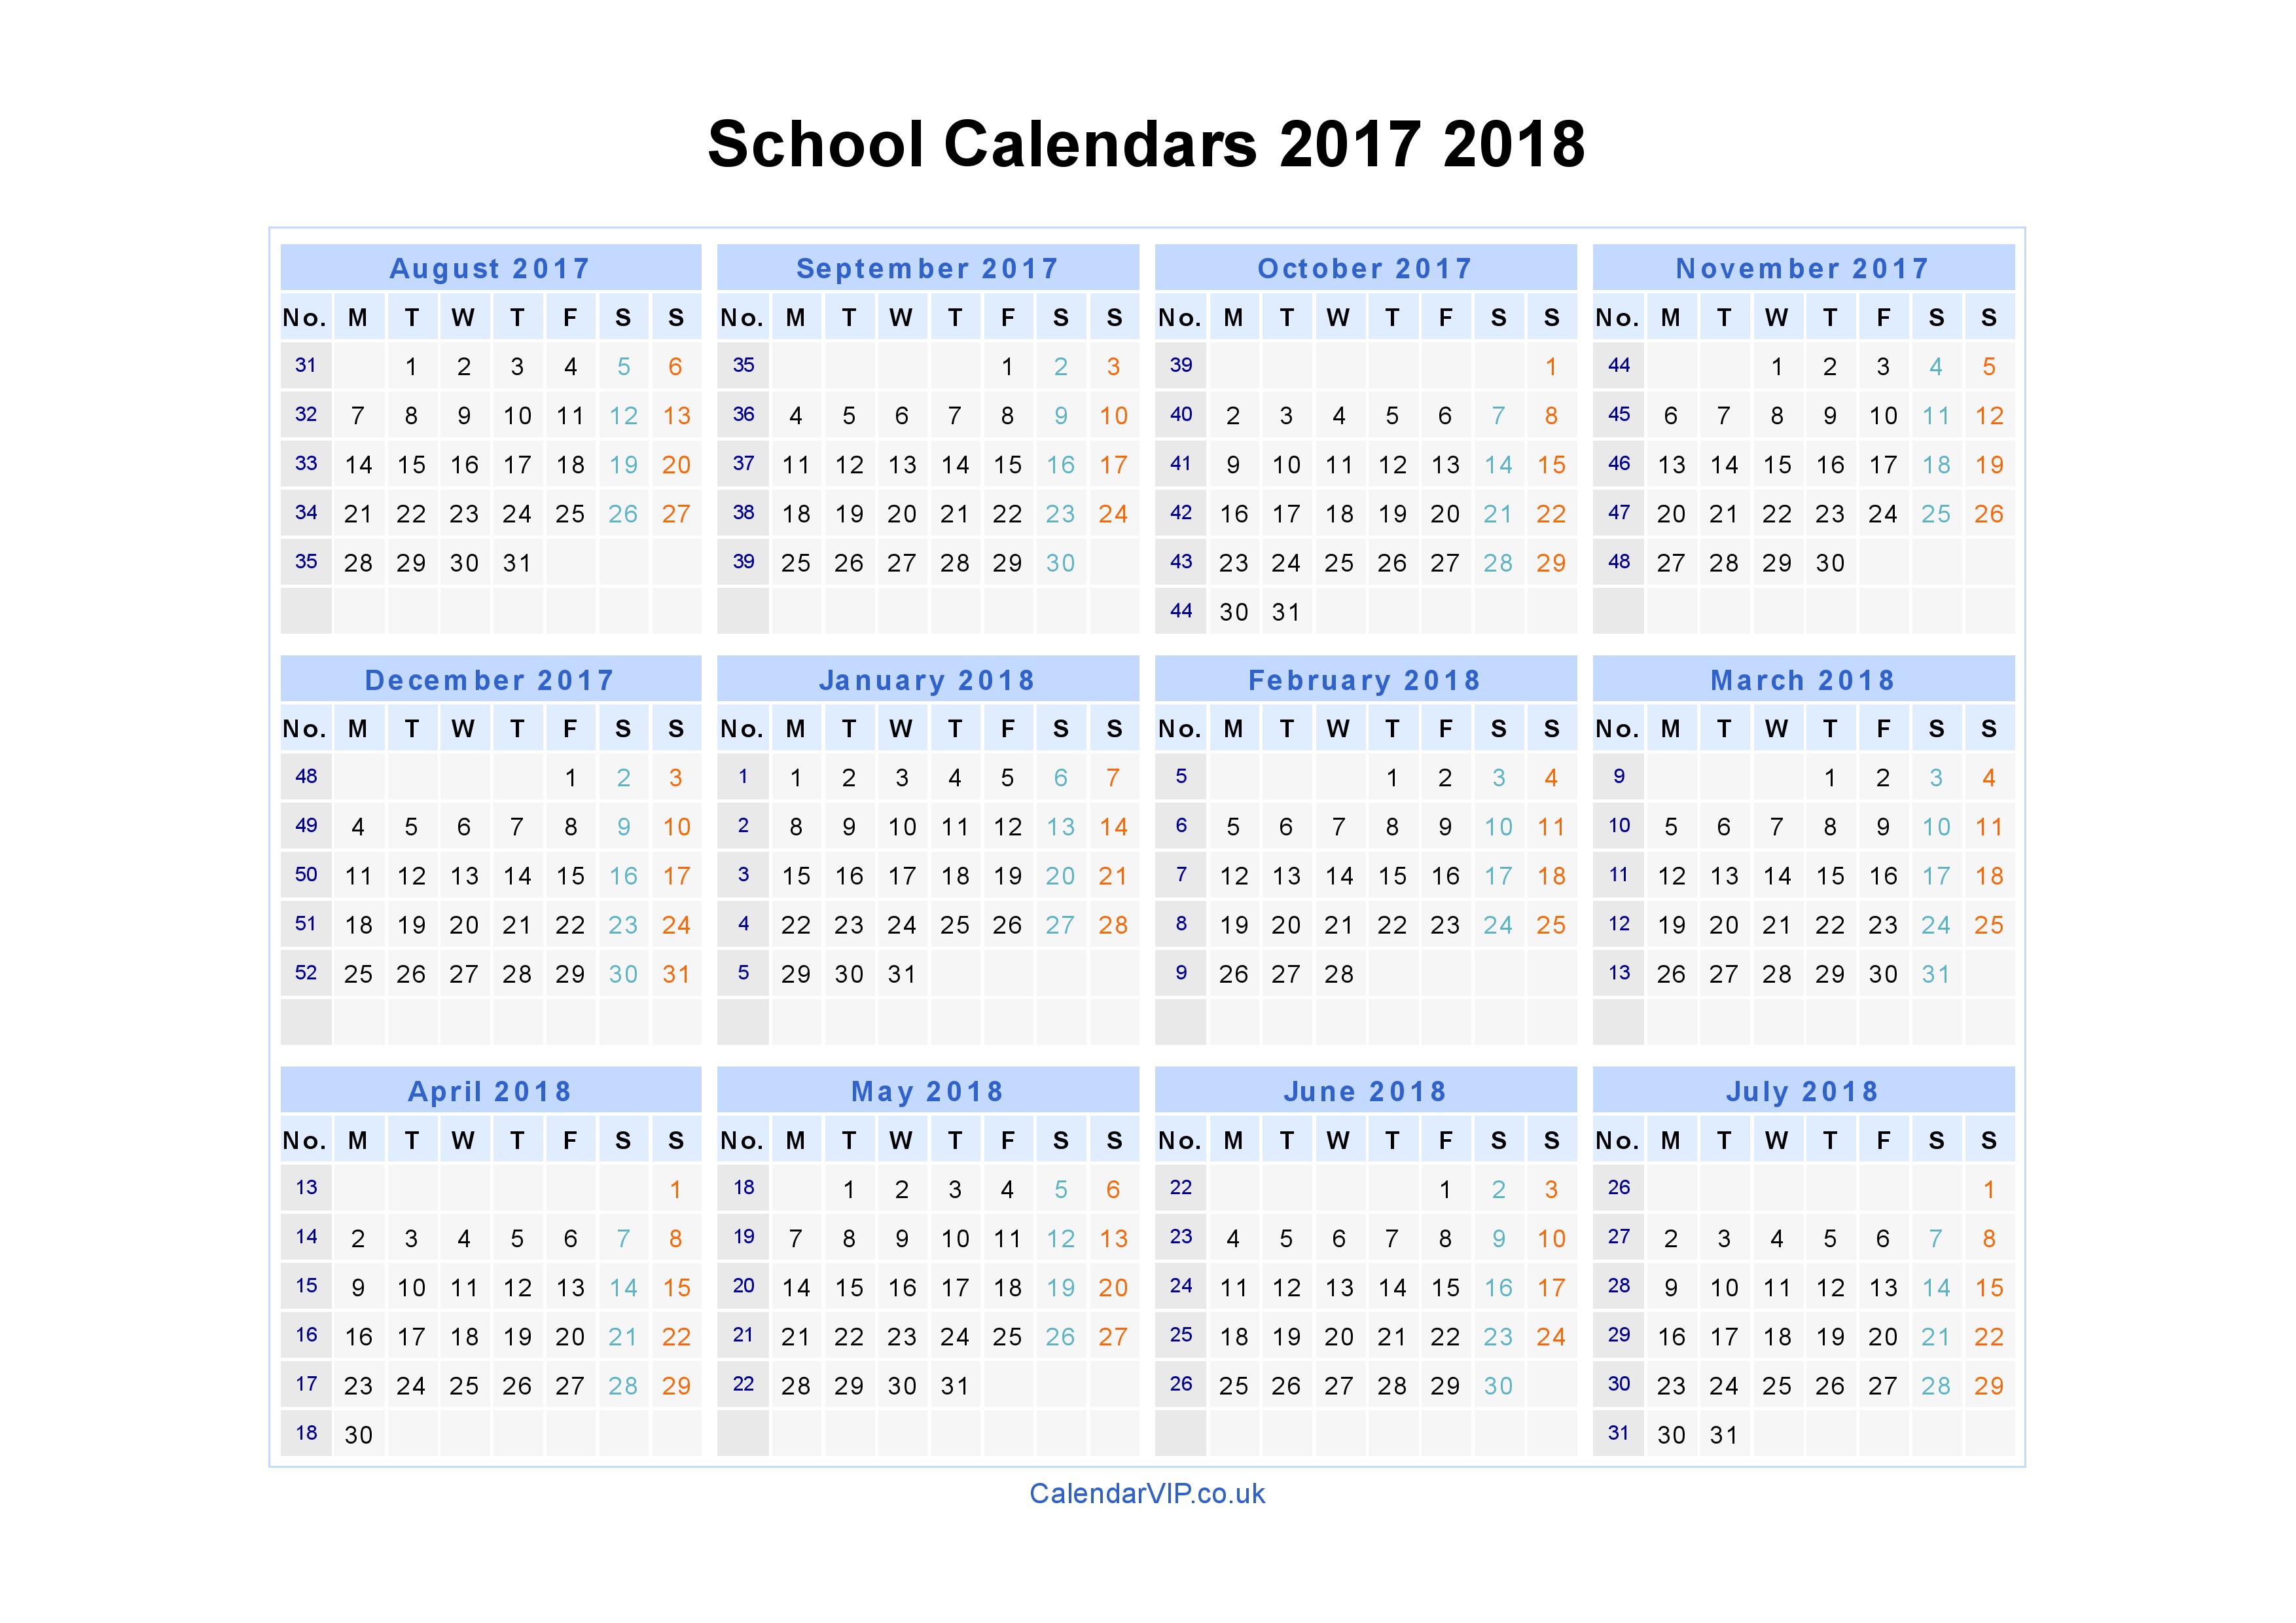 August 2017 Calendar Uk | monthly calendar printable